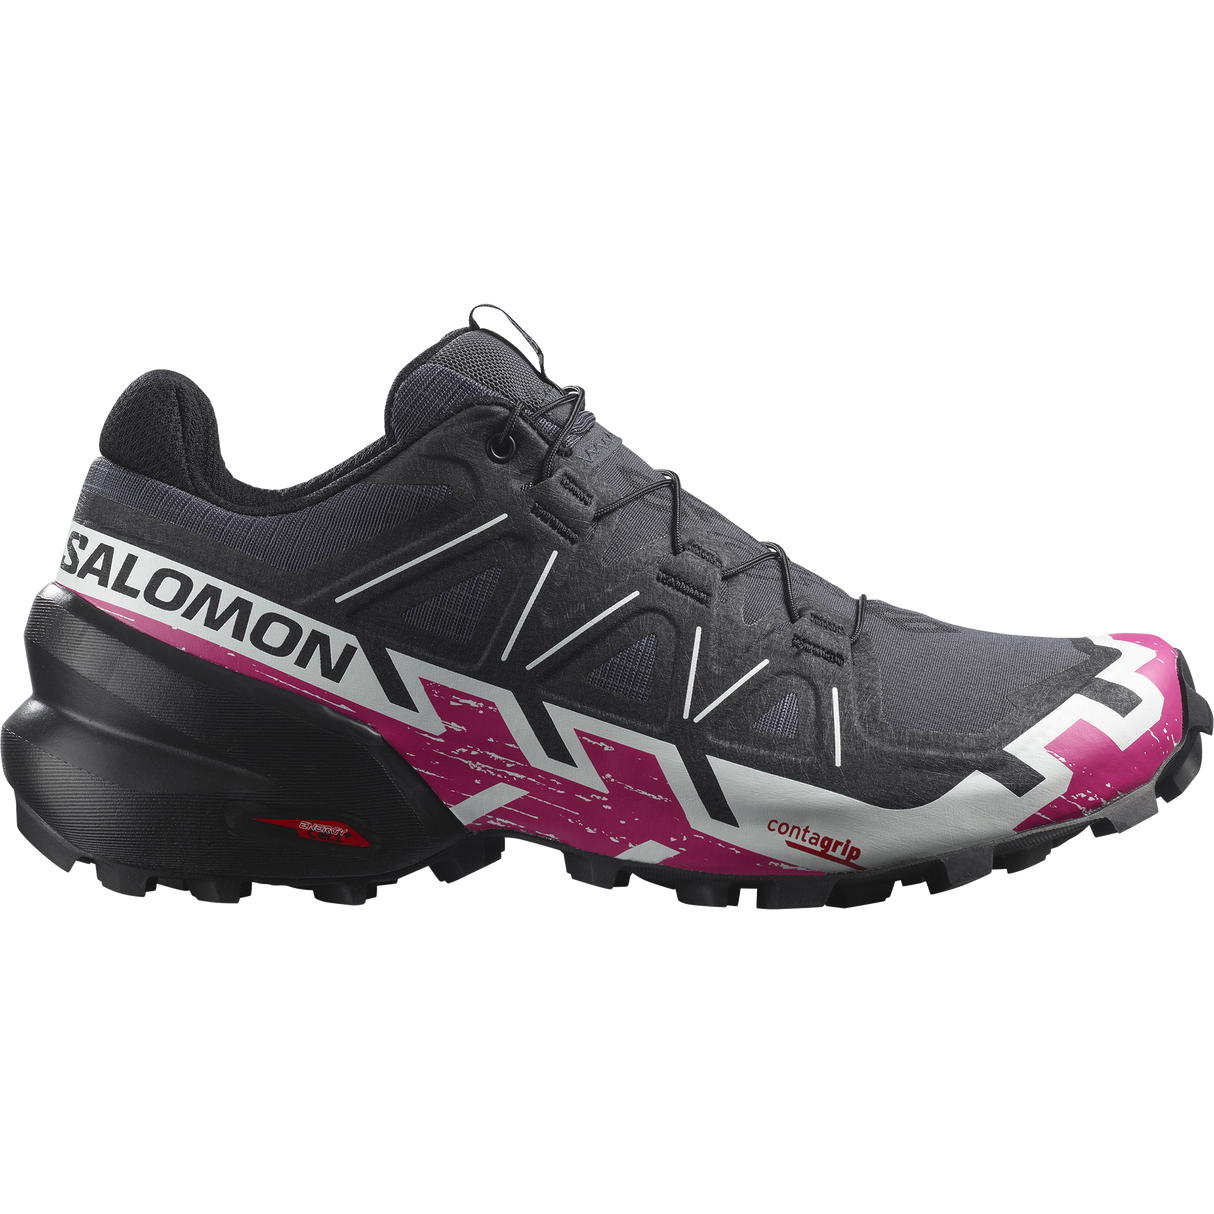 SALOMON : Running shoes and clothing, trail running, hiking, ski